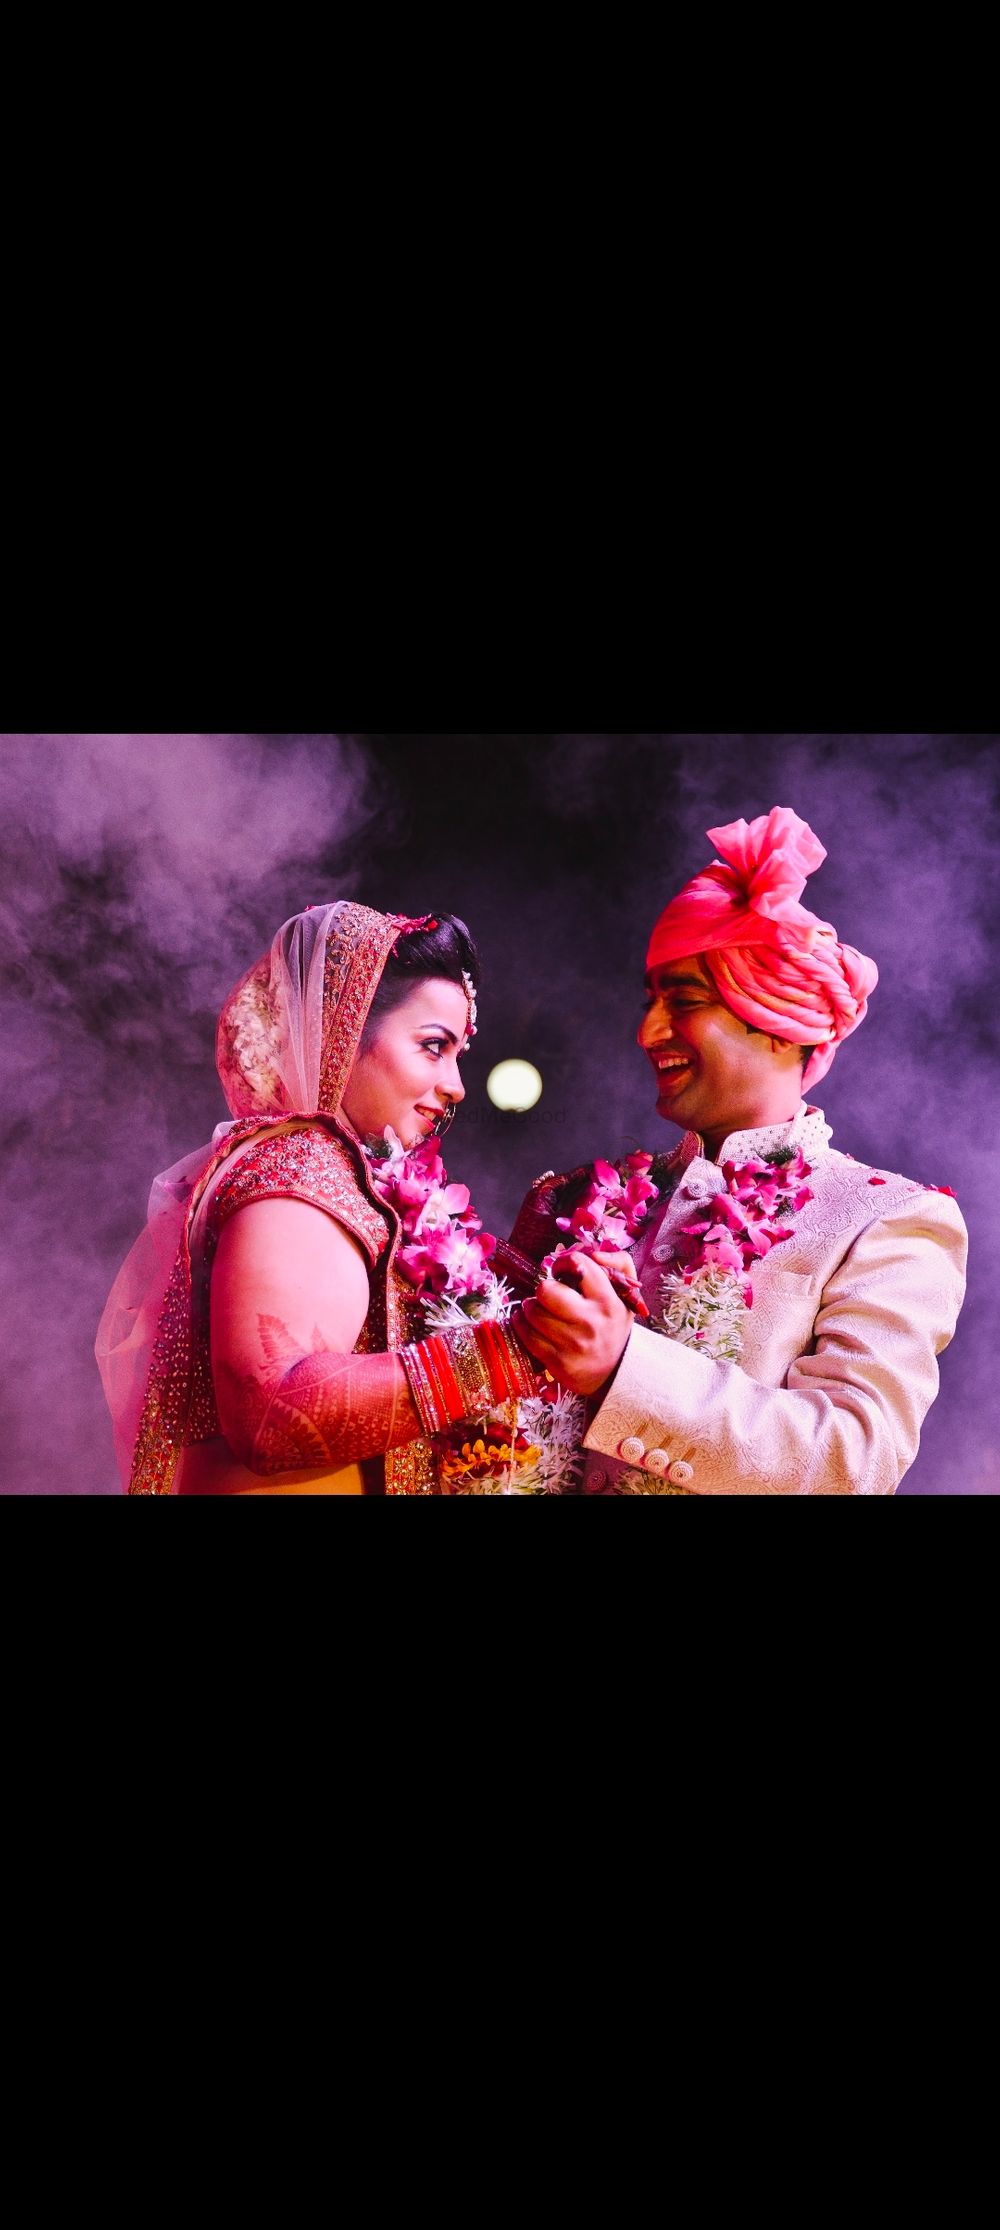 Photo By Raj Production - Pre Wedding Photographers